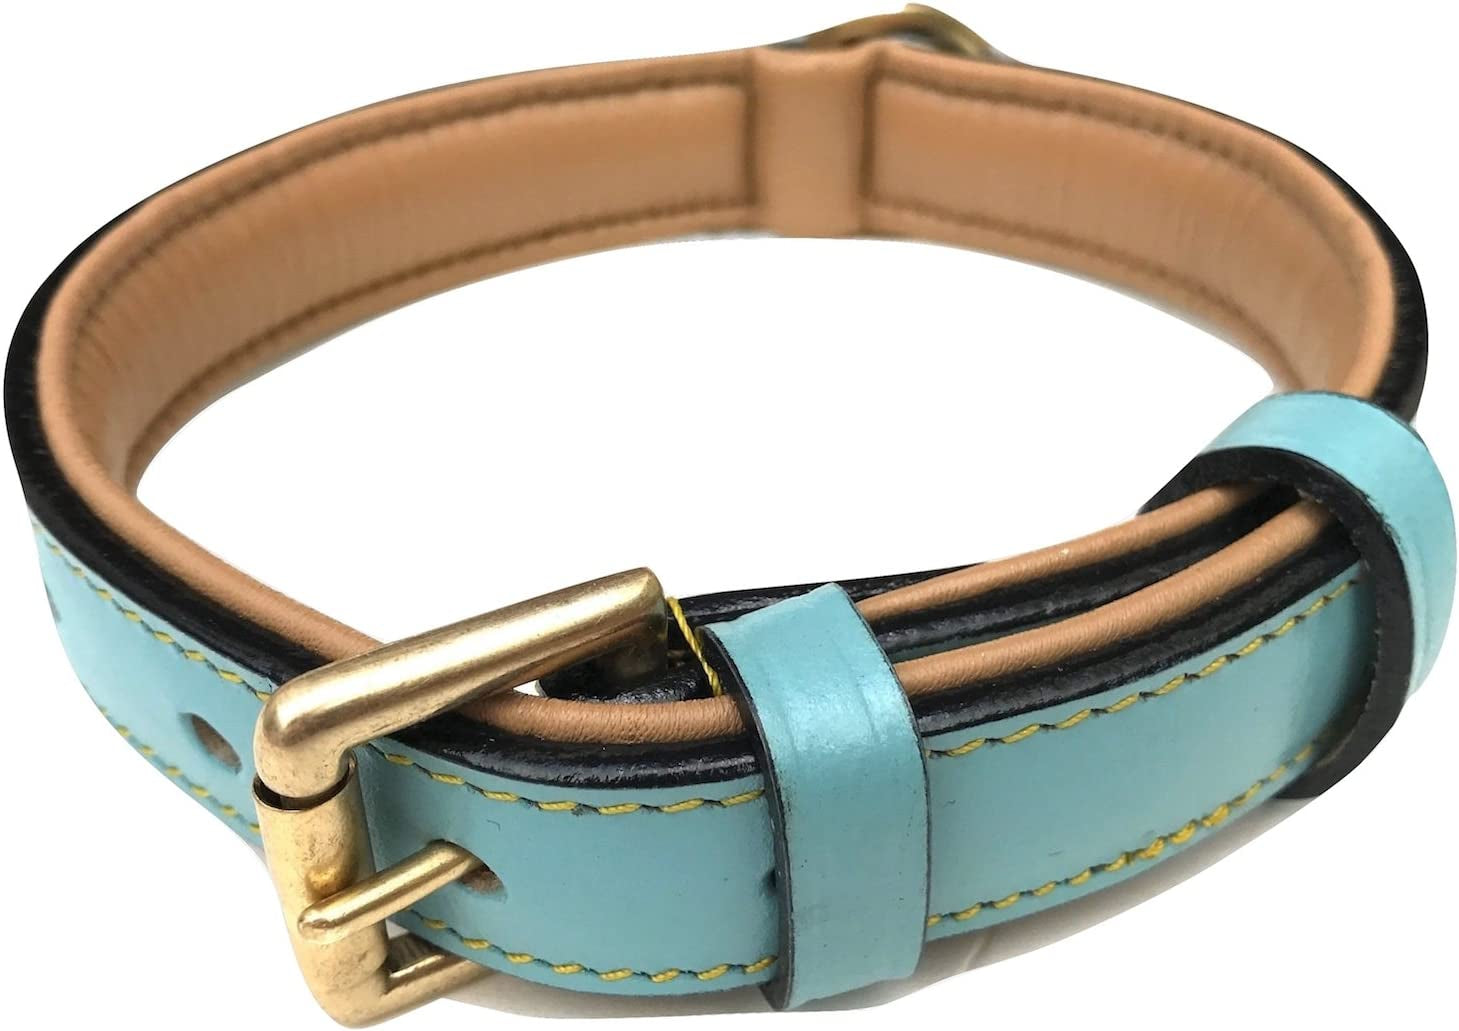 Padded Leather Dog Collar - Everyday-Sales.com